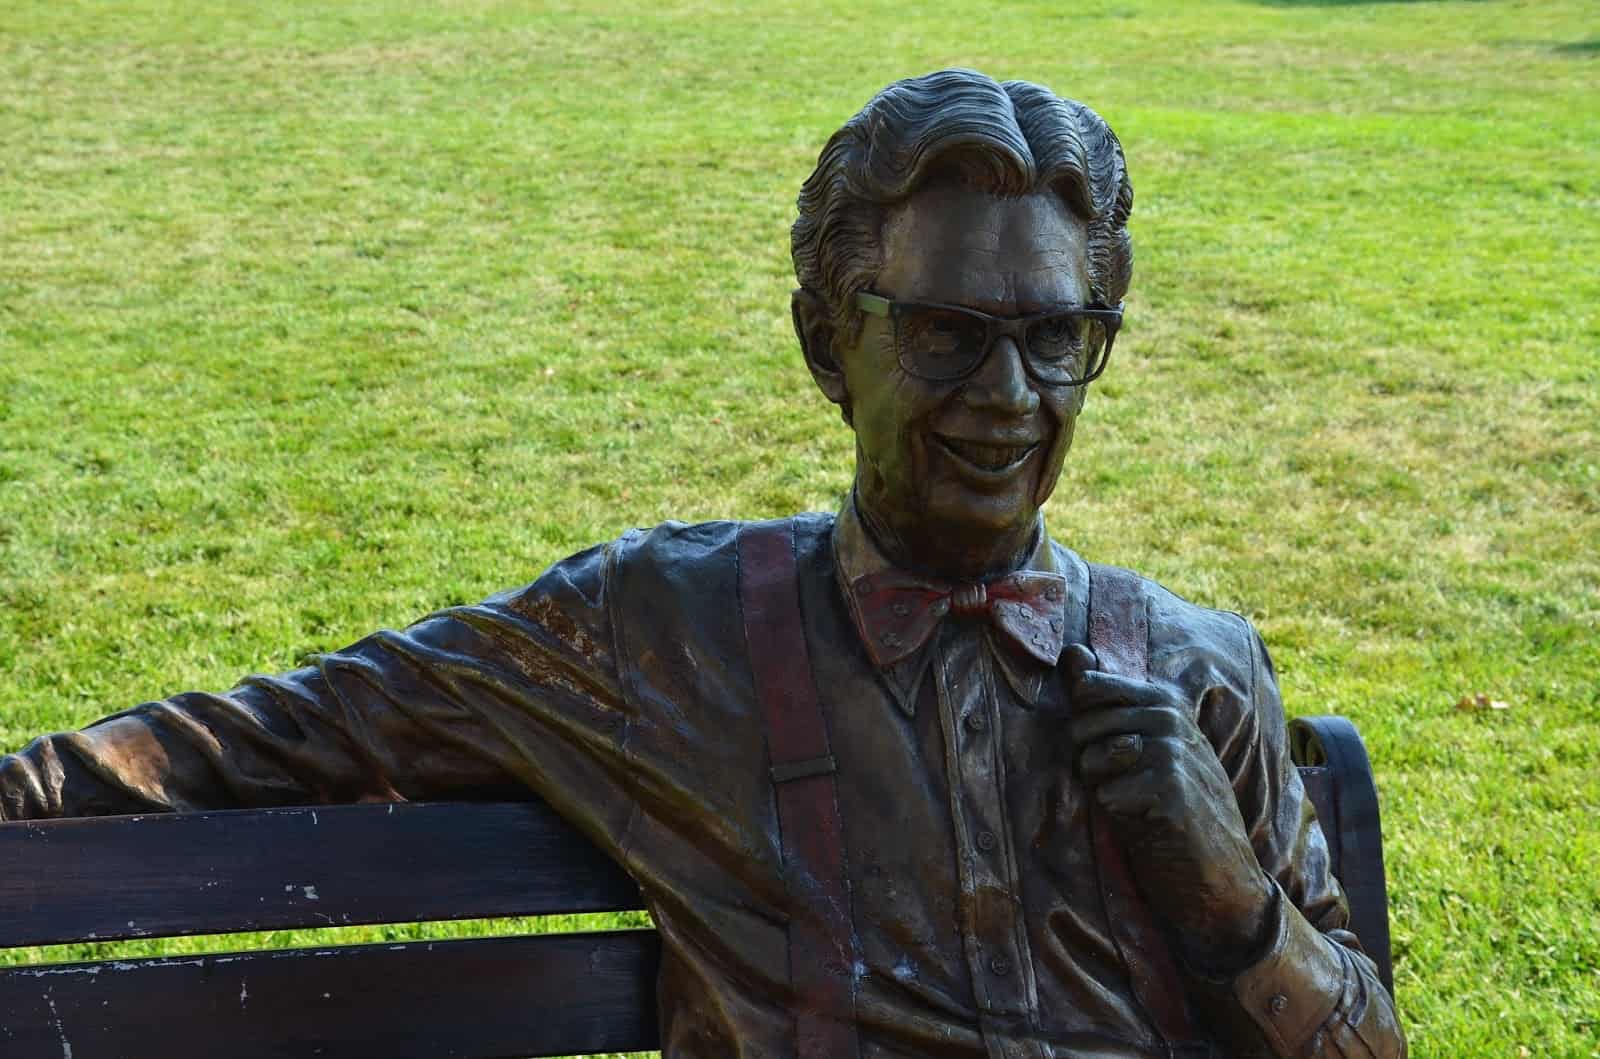 Orville Redenbacher statue in Valparaiso, Indiana